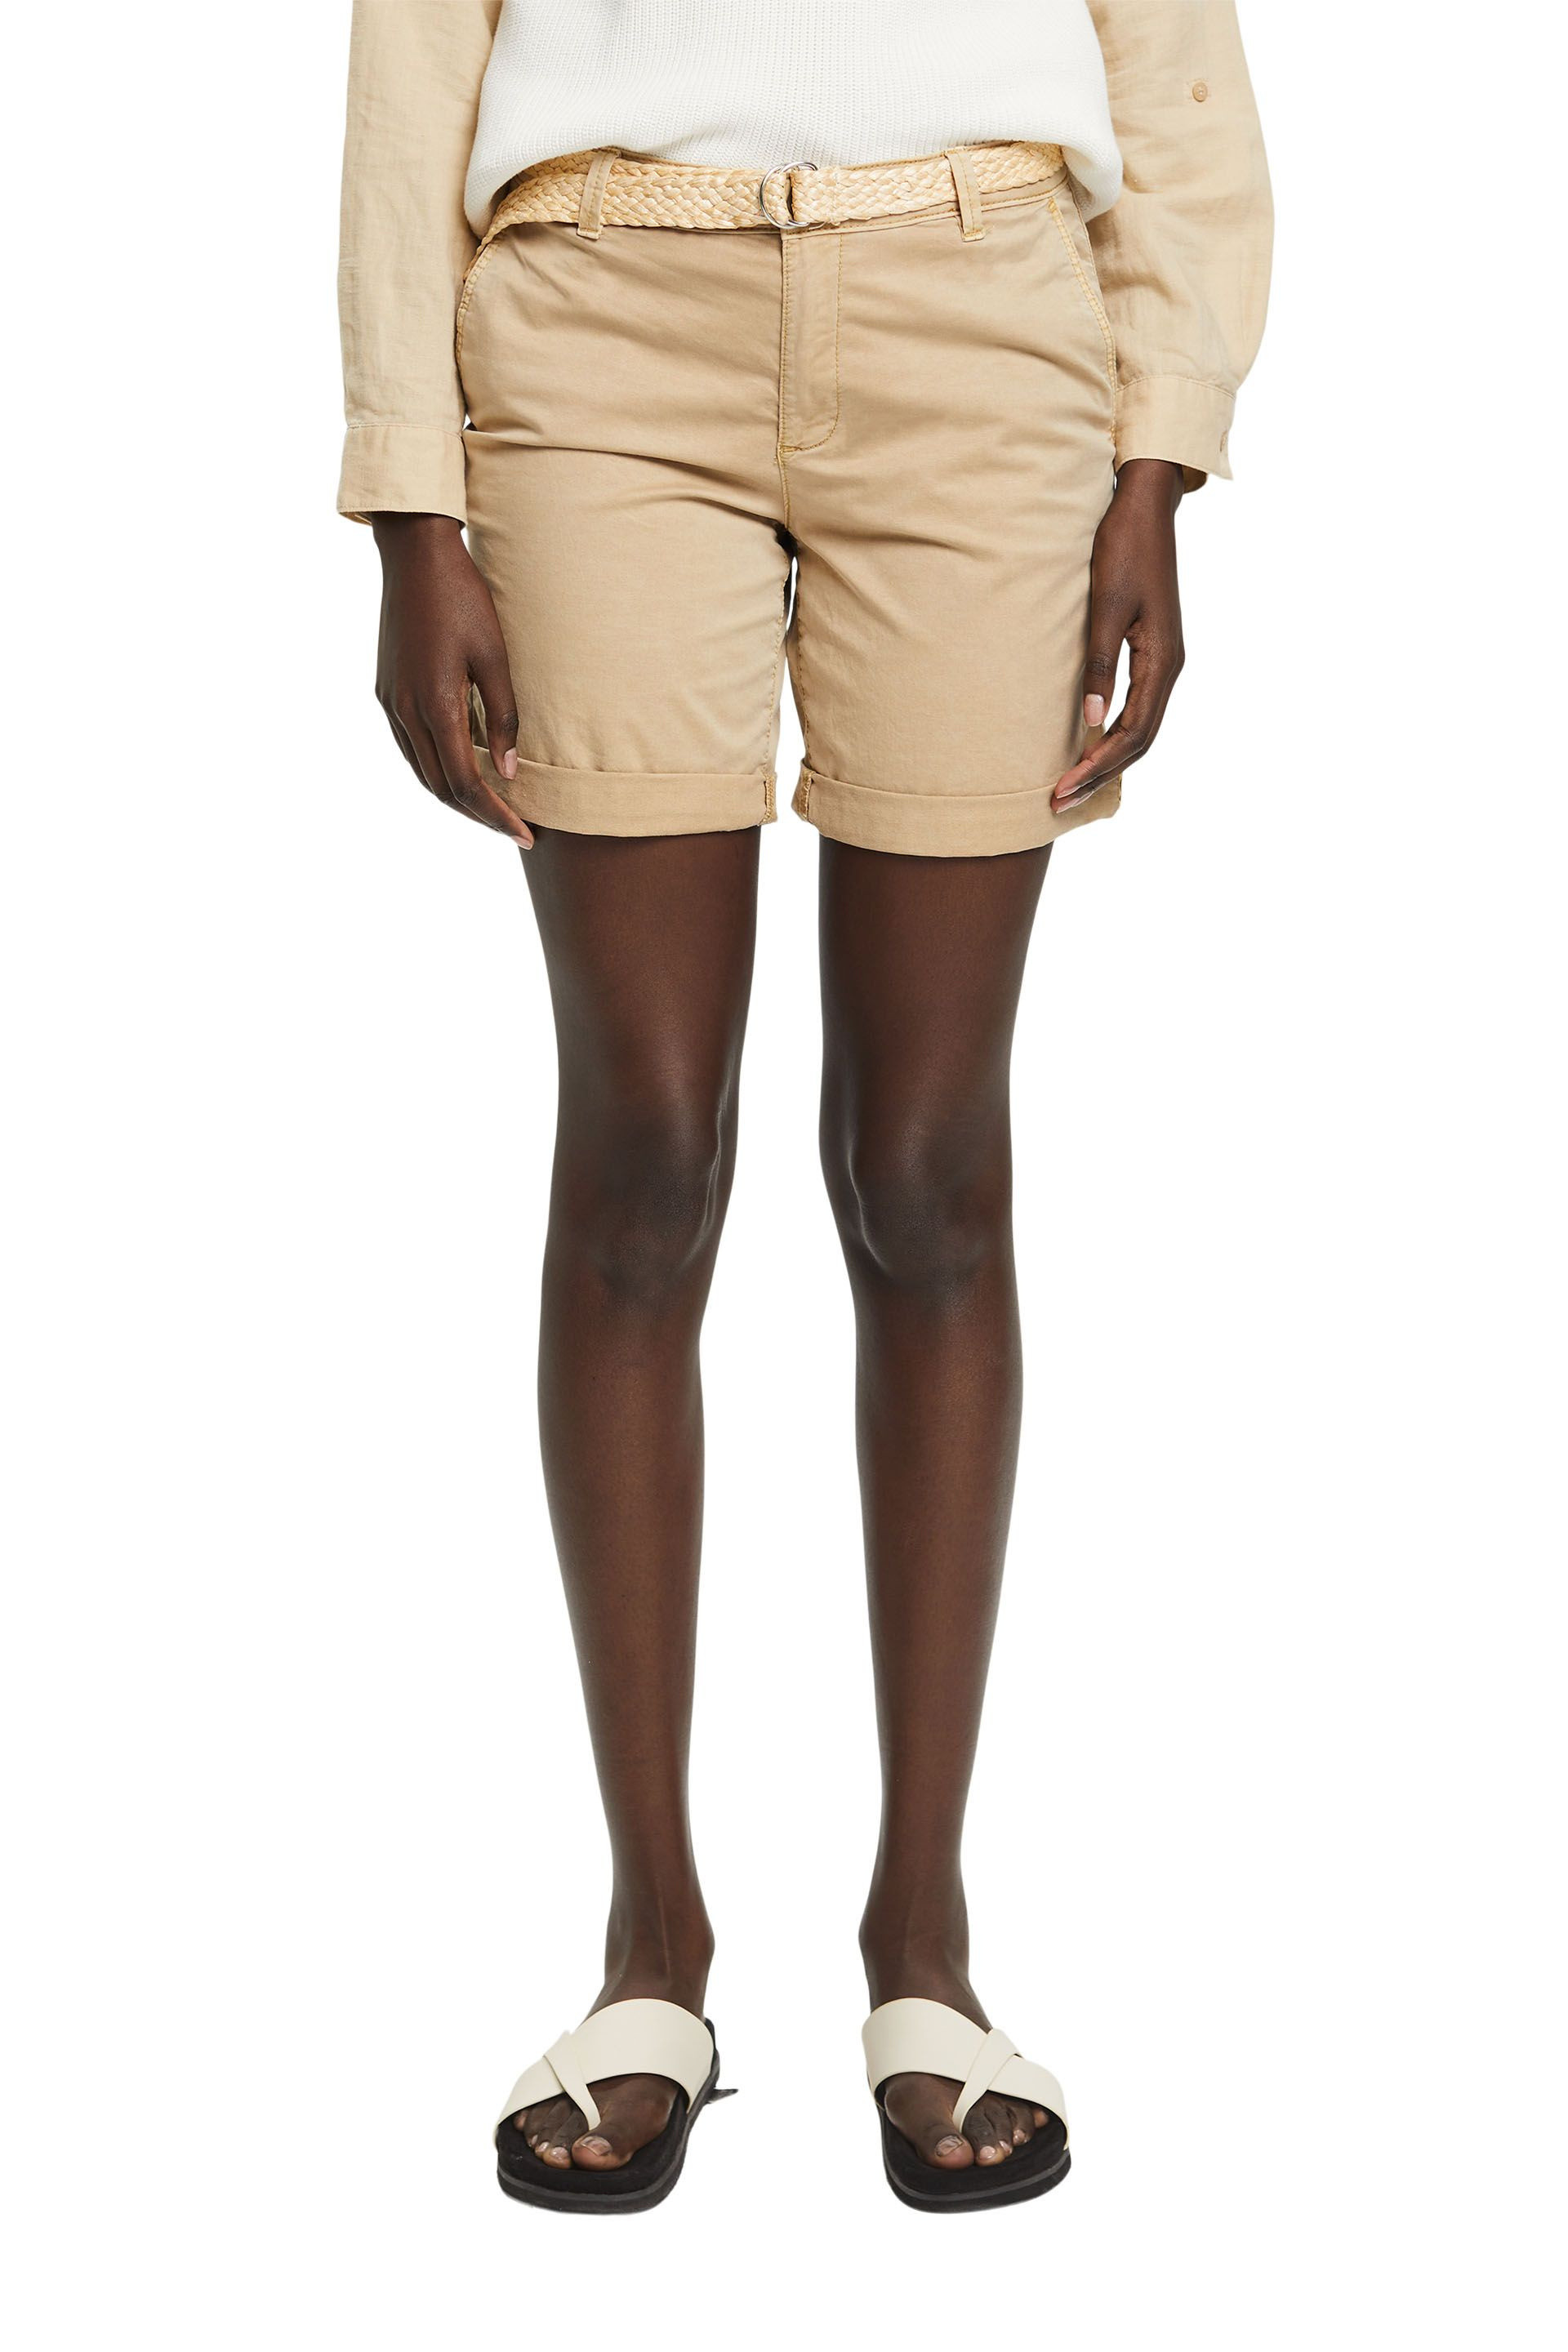 Esprit - Shorts with braided raffia belt, Sand, large image number 2